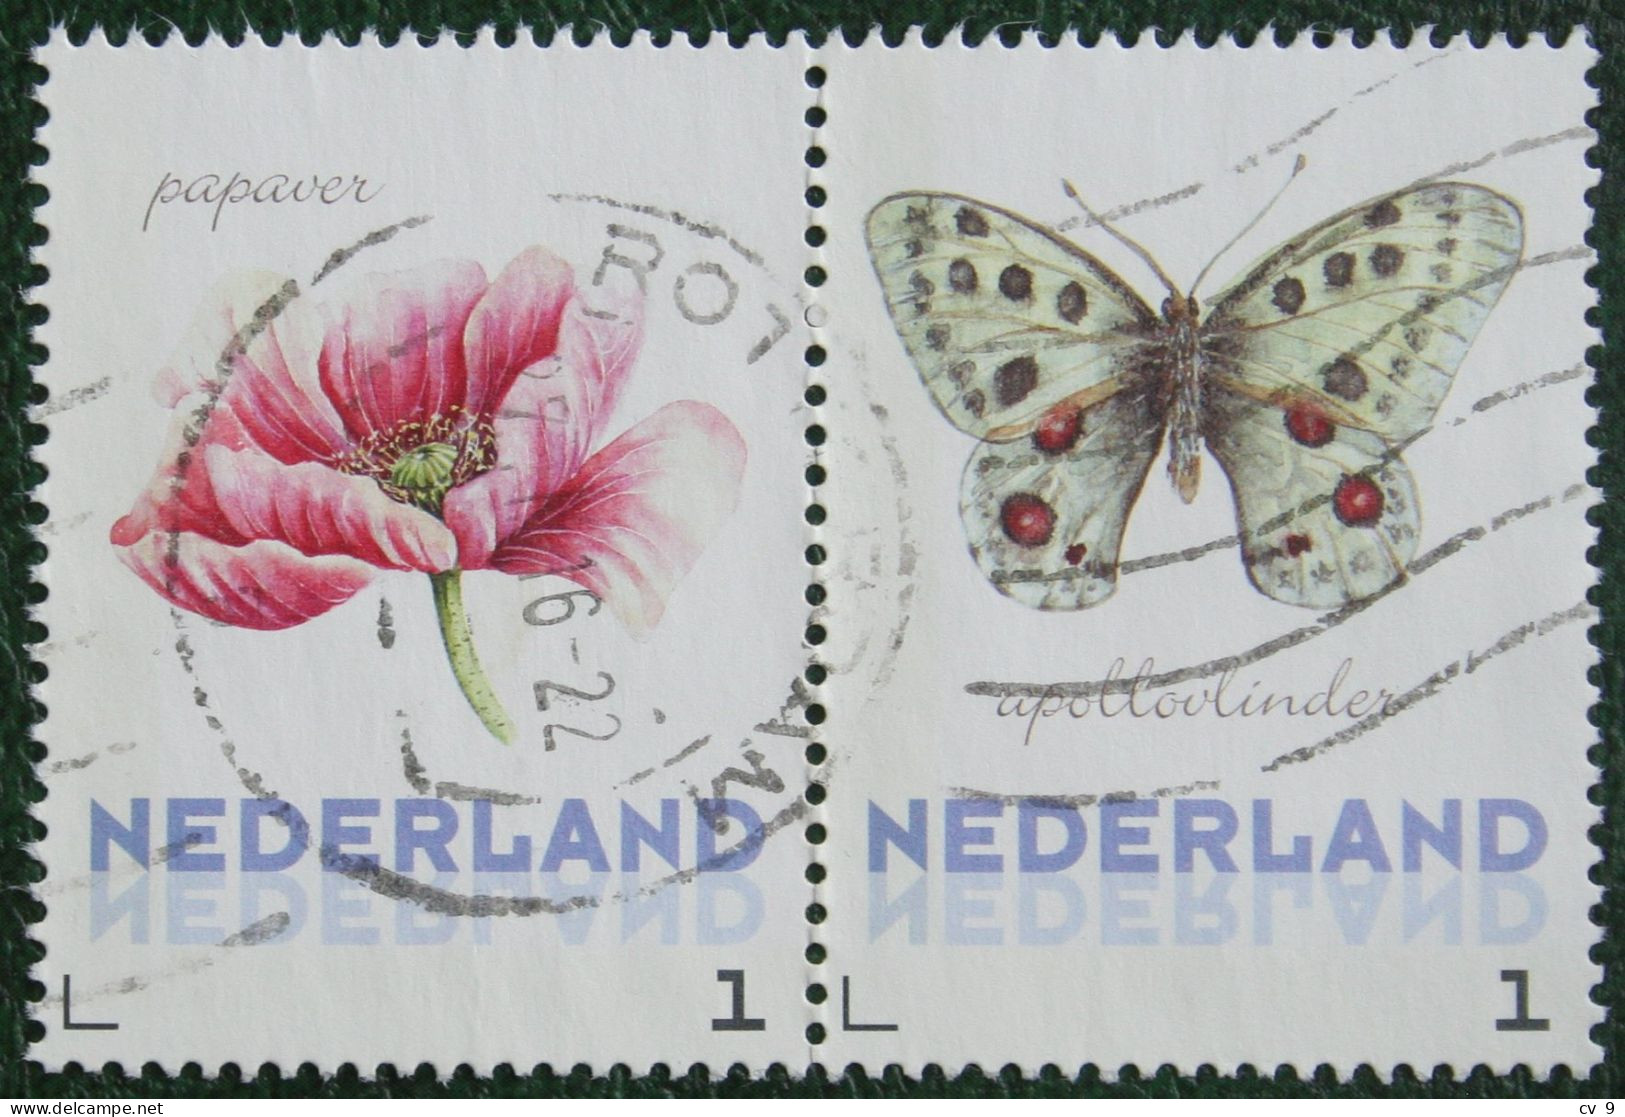 Papillon Butterfly Flower Blumen Fleur Persoonlijke JANNEKE BRINKMAN 2014 Gestempeld USED Oblitere NEDERLAND NIEDERLANDE - Personnalized Stamps